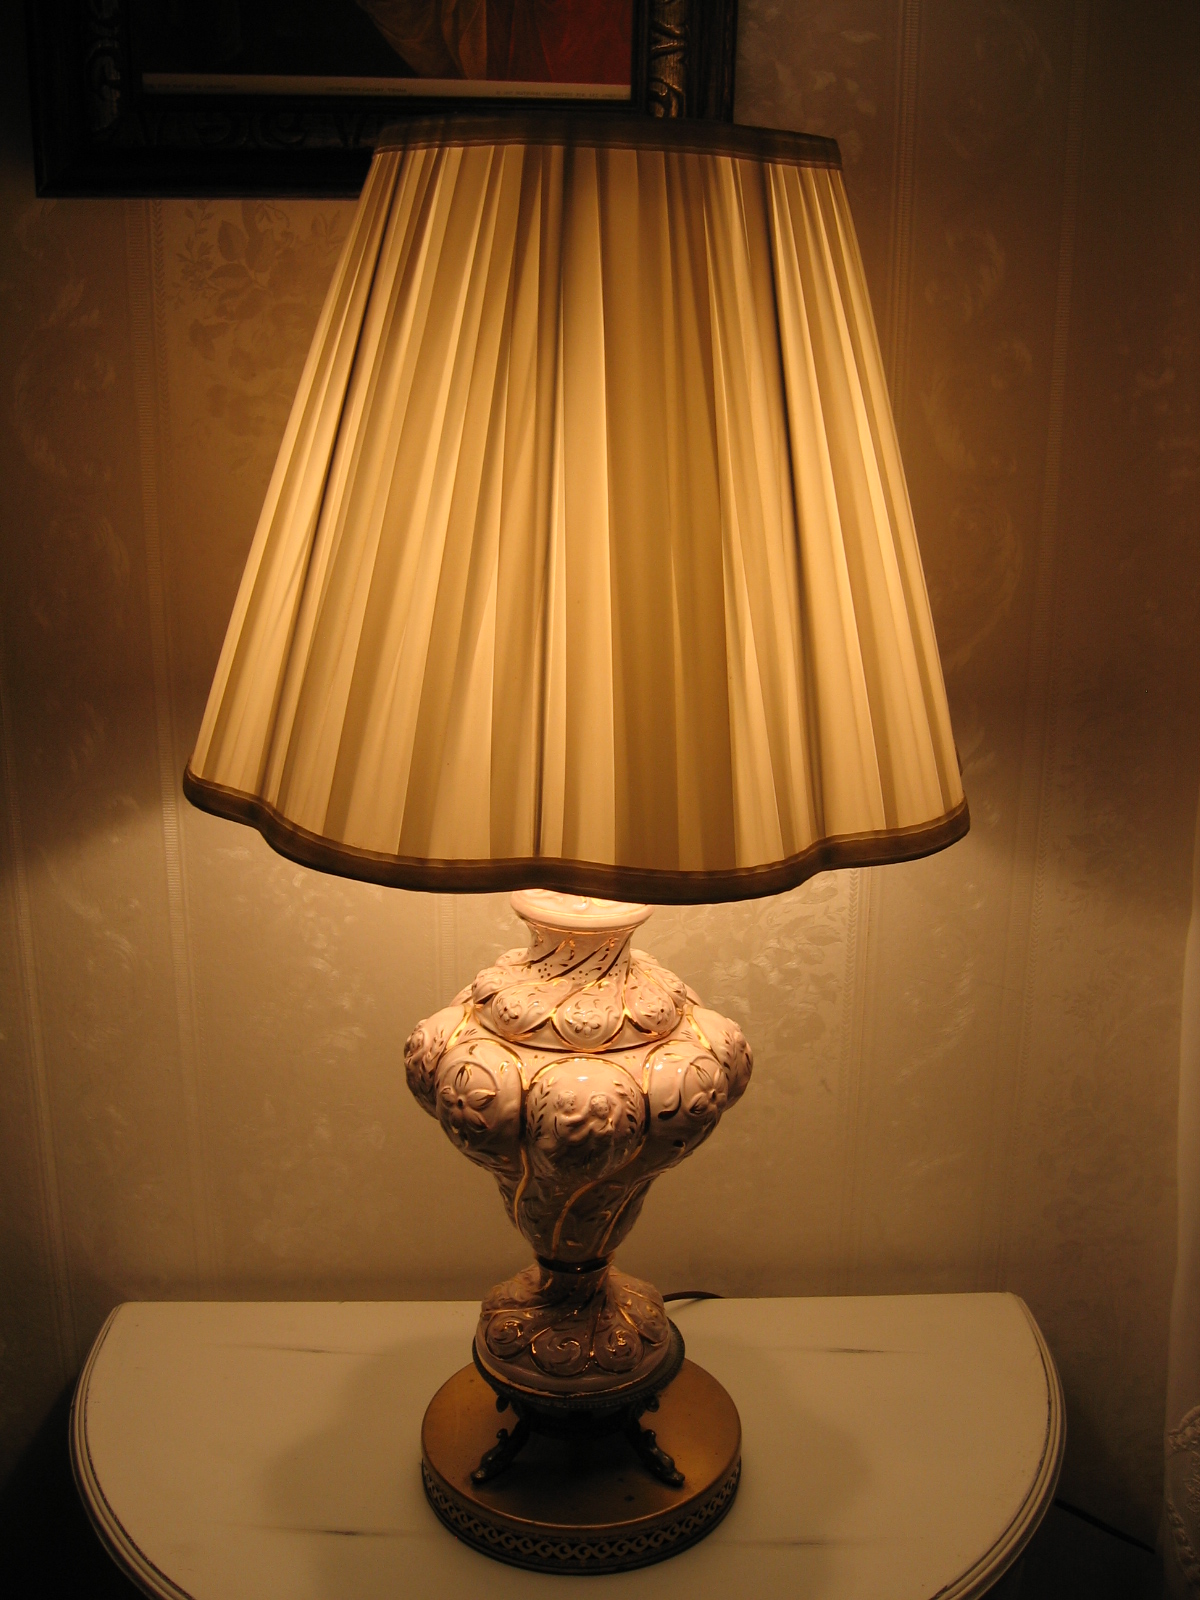 16 Vintage Table Lamps for Retro Home Decor - Warisan Lighting